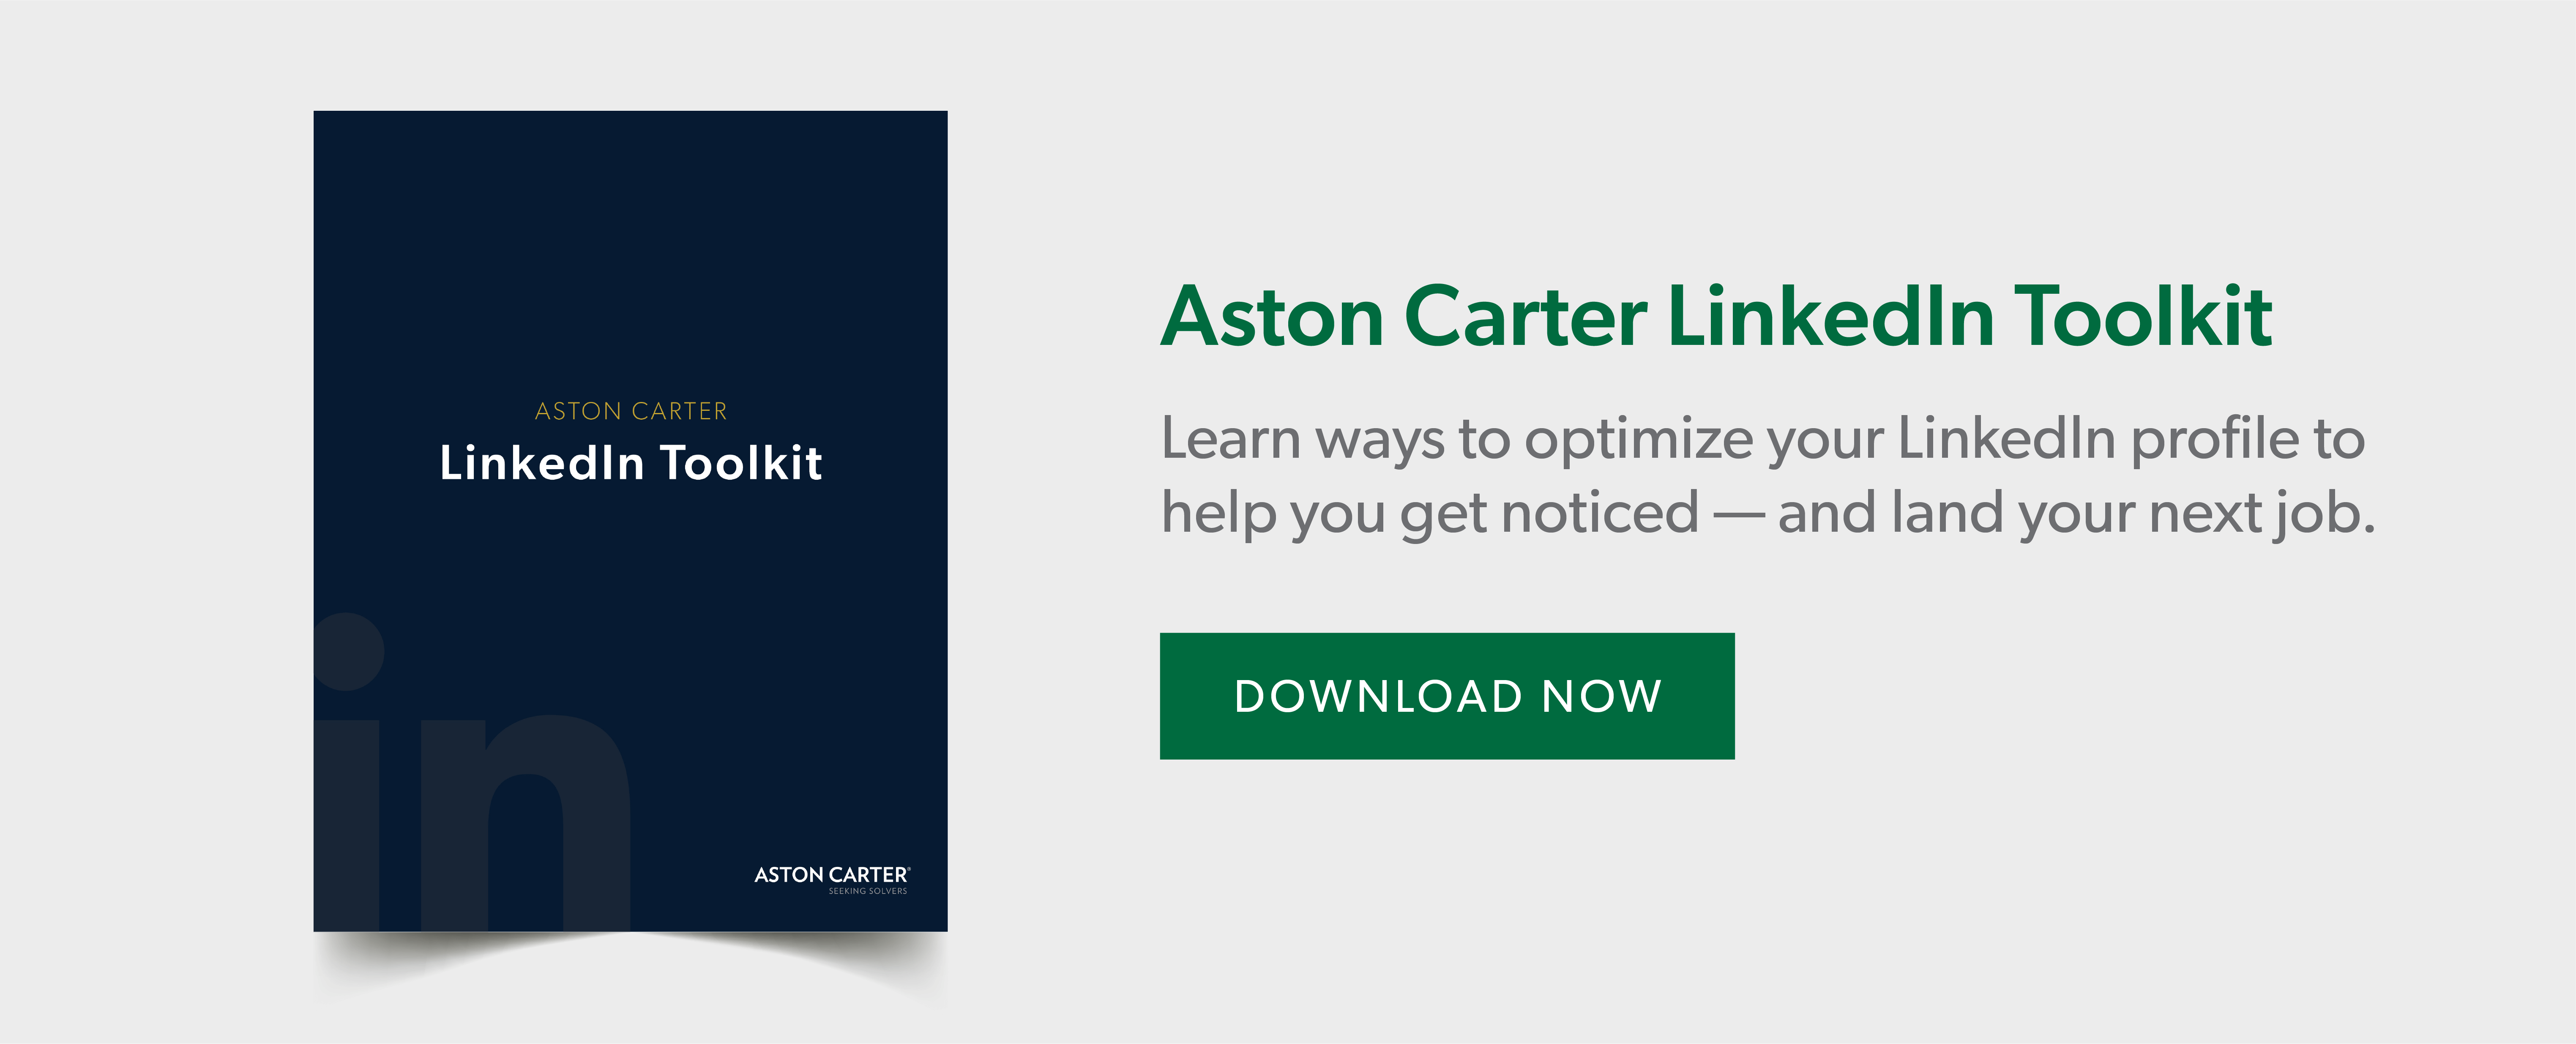 How to Maximize Your LinkedIn Profile - Aston Carter